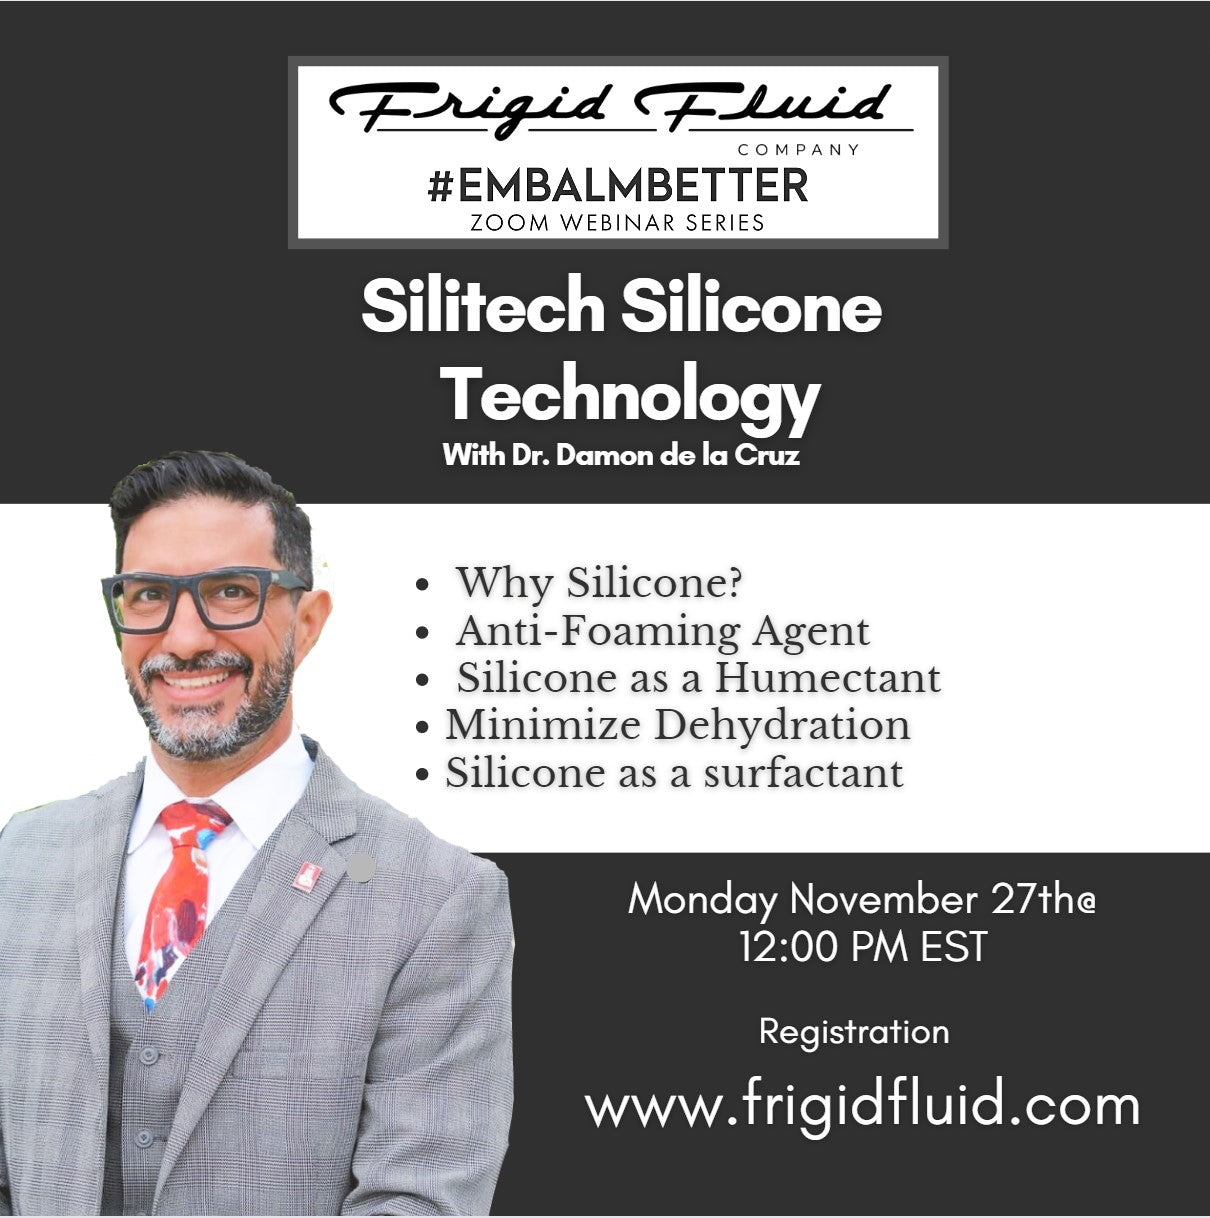 Silitech Silicone Technology Webinar with Dr. Damon de la Cruz